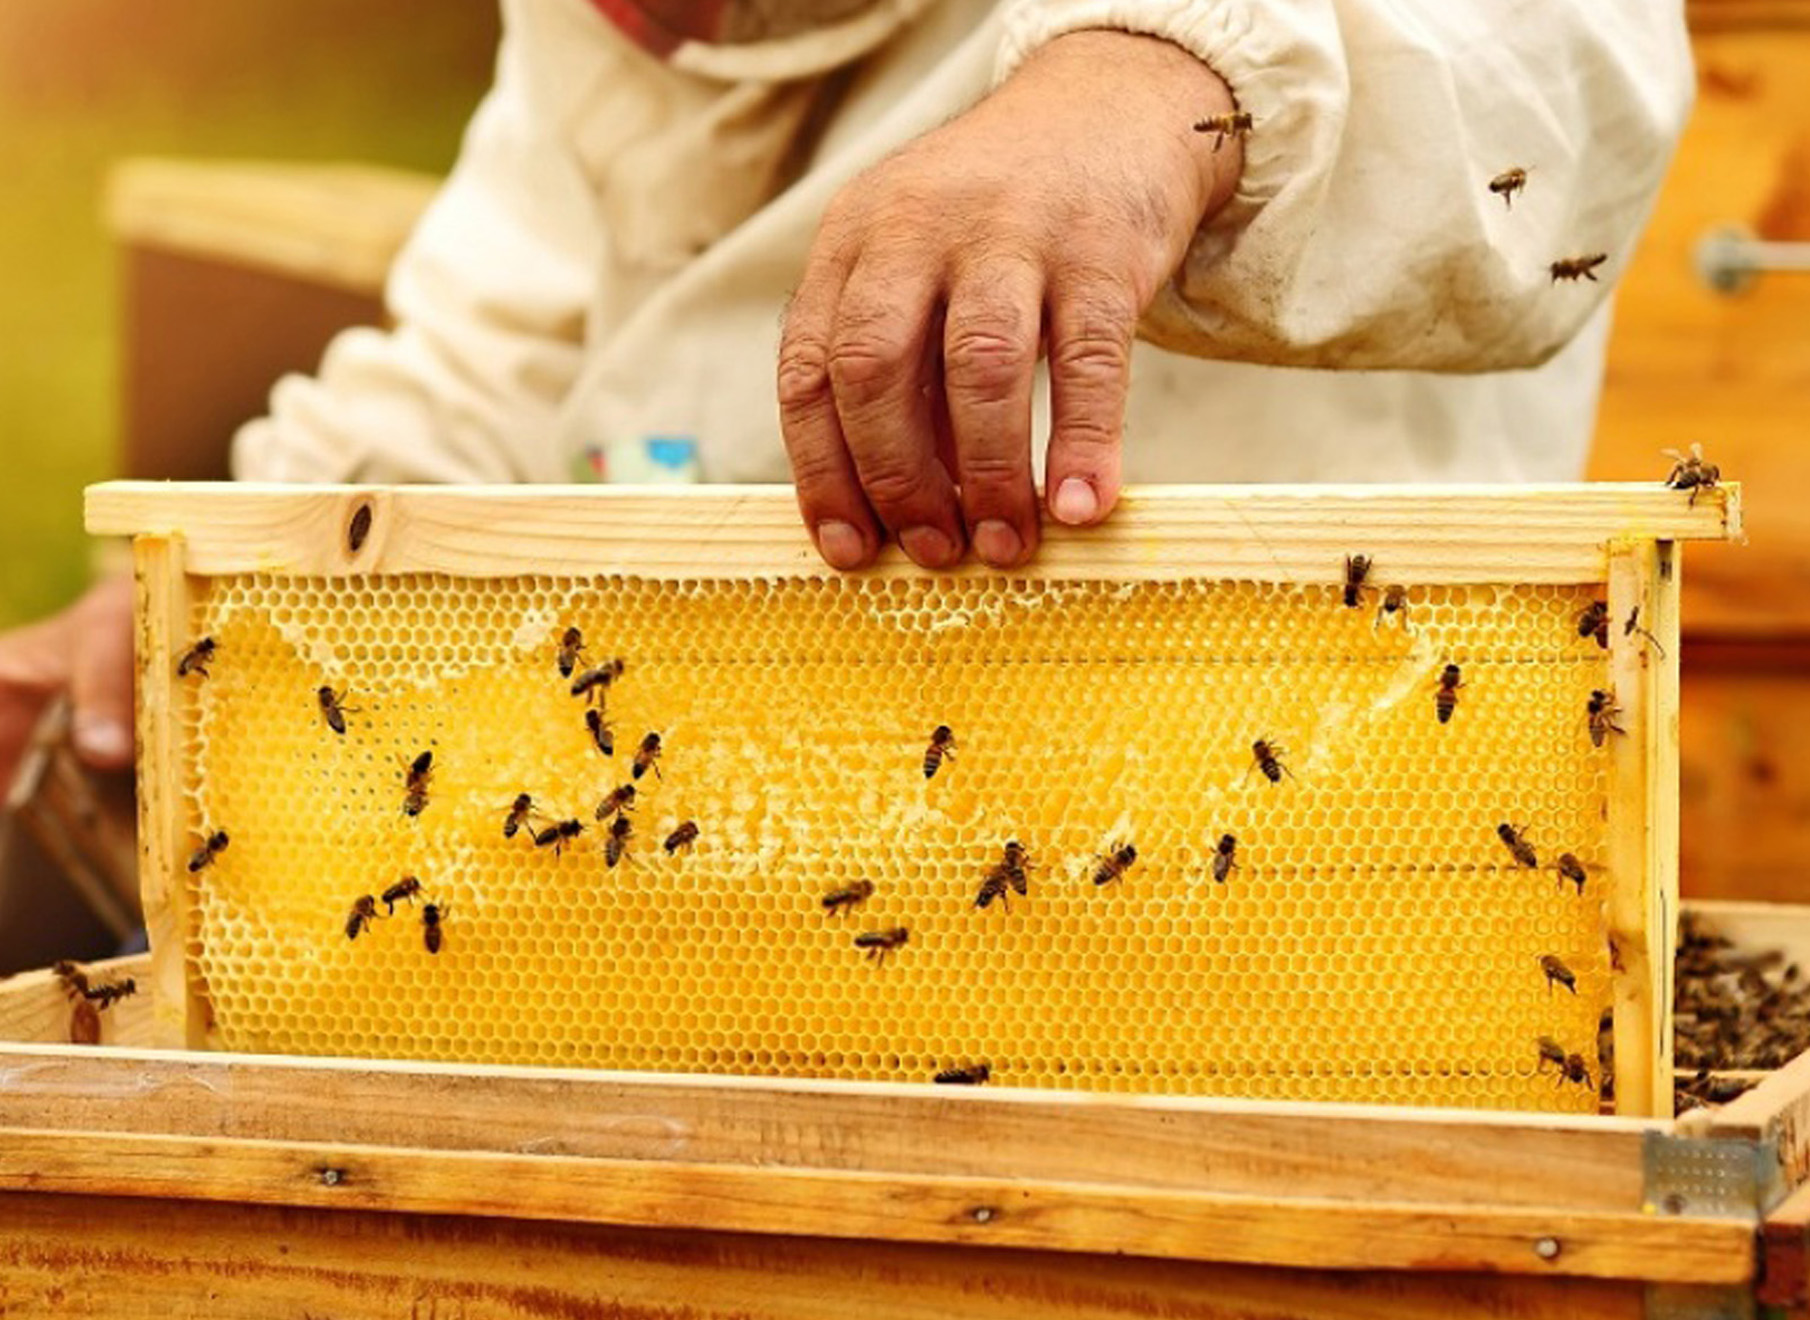 Beekeeping supplies and materials